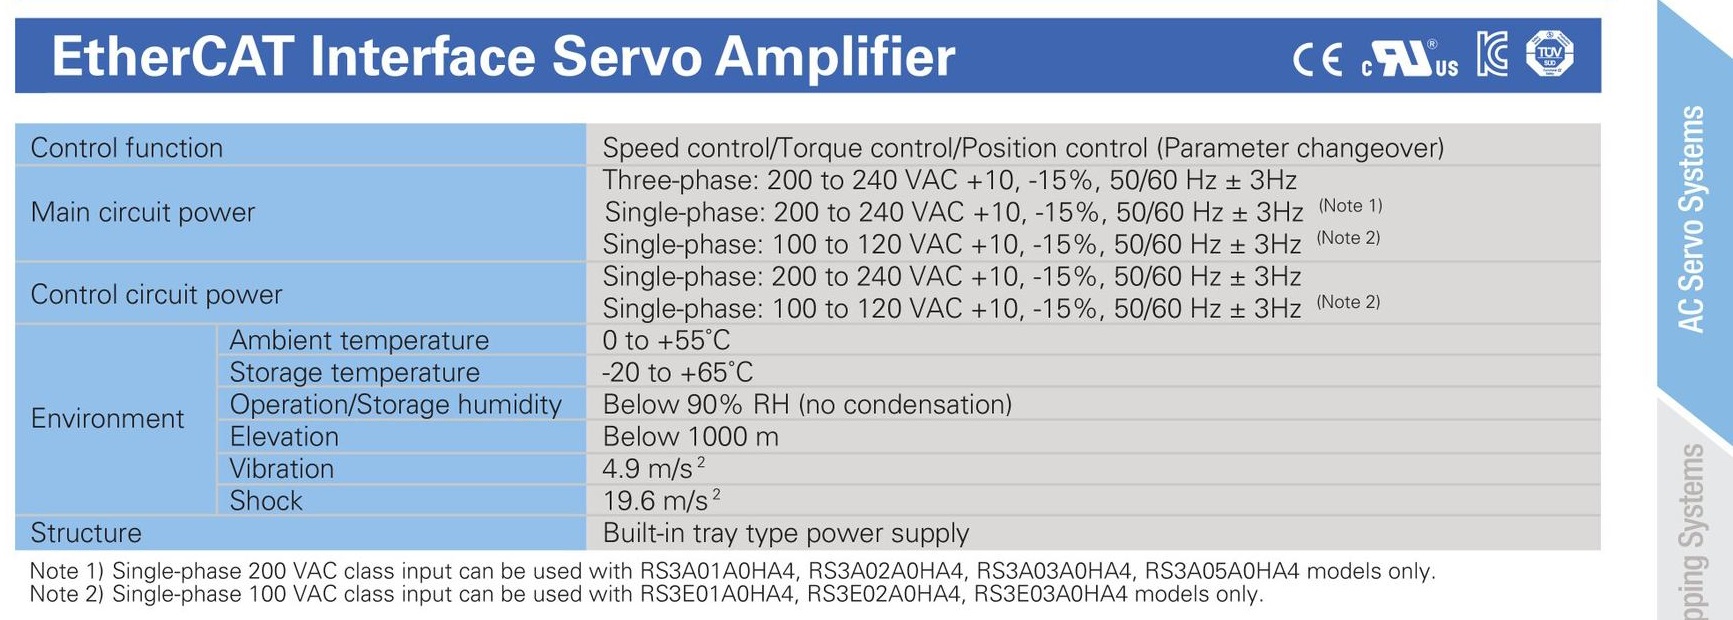 servo-amplifier-cables-configuration-type